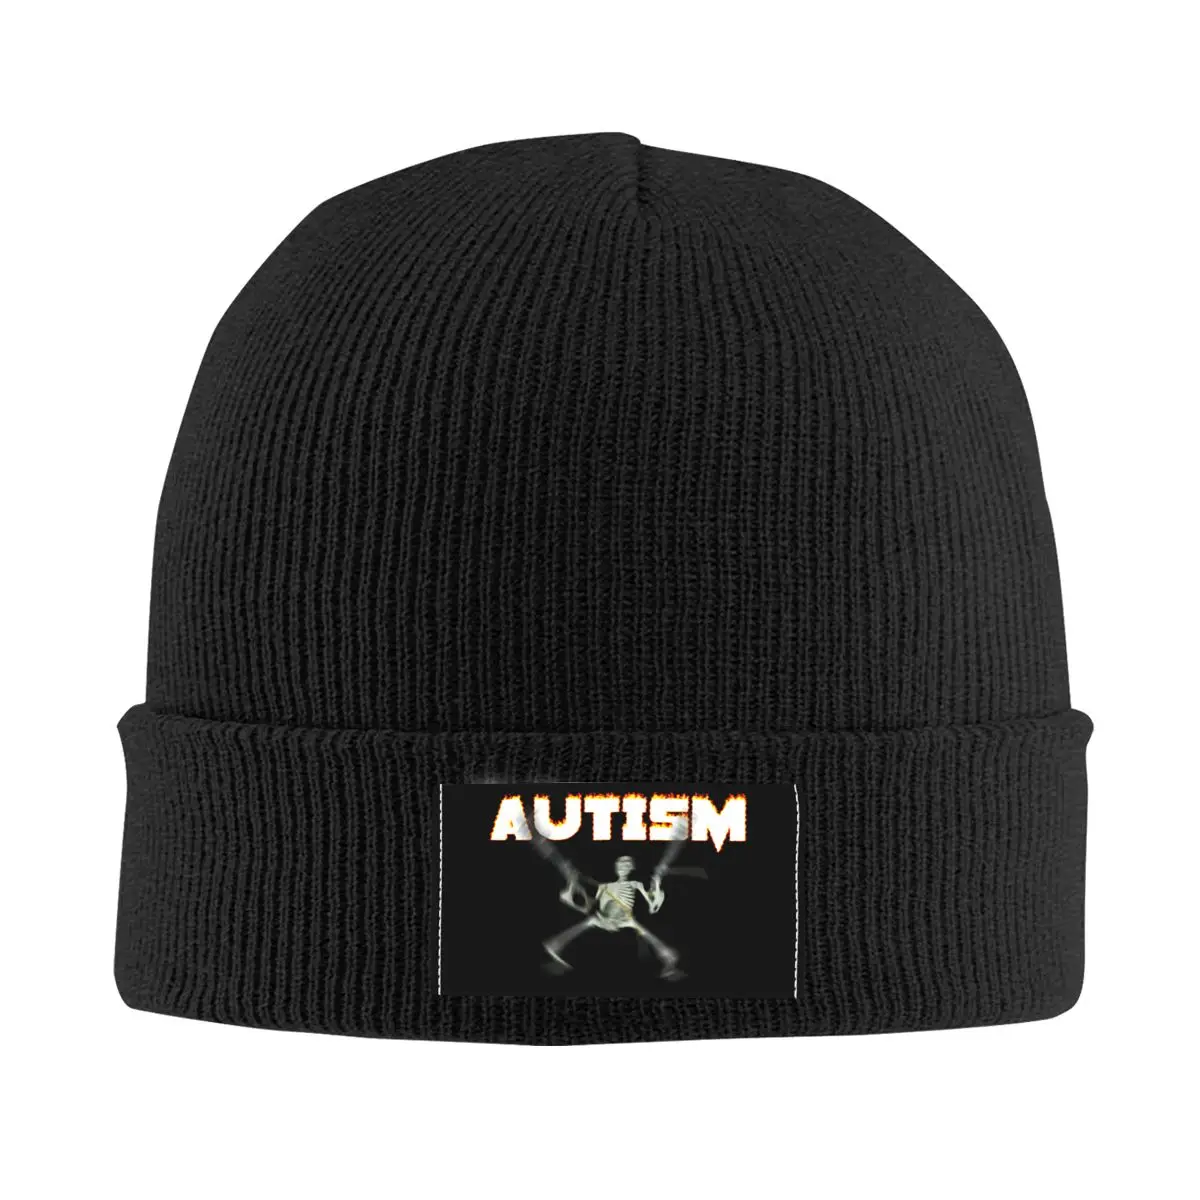 

Autism Skeleton Meme Cuff Beanie For Men Women Winter Warm Skull Knitting Hat Cap